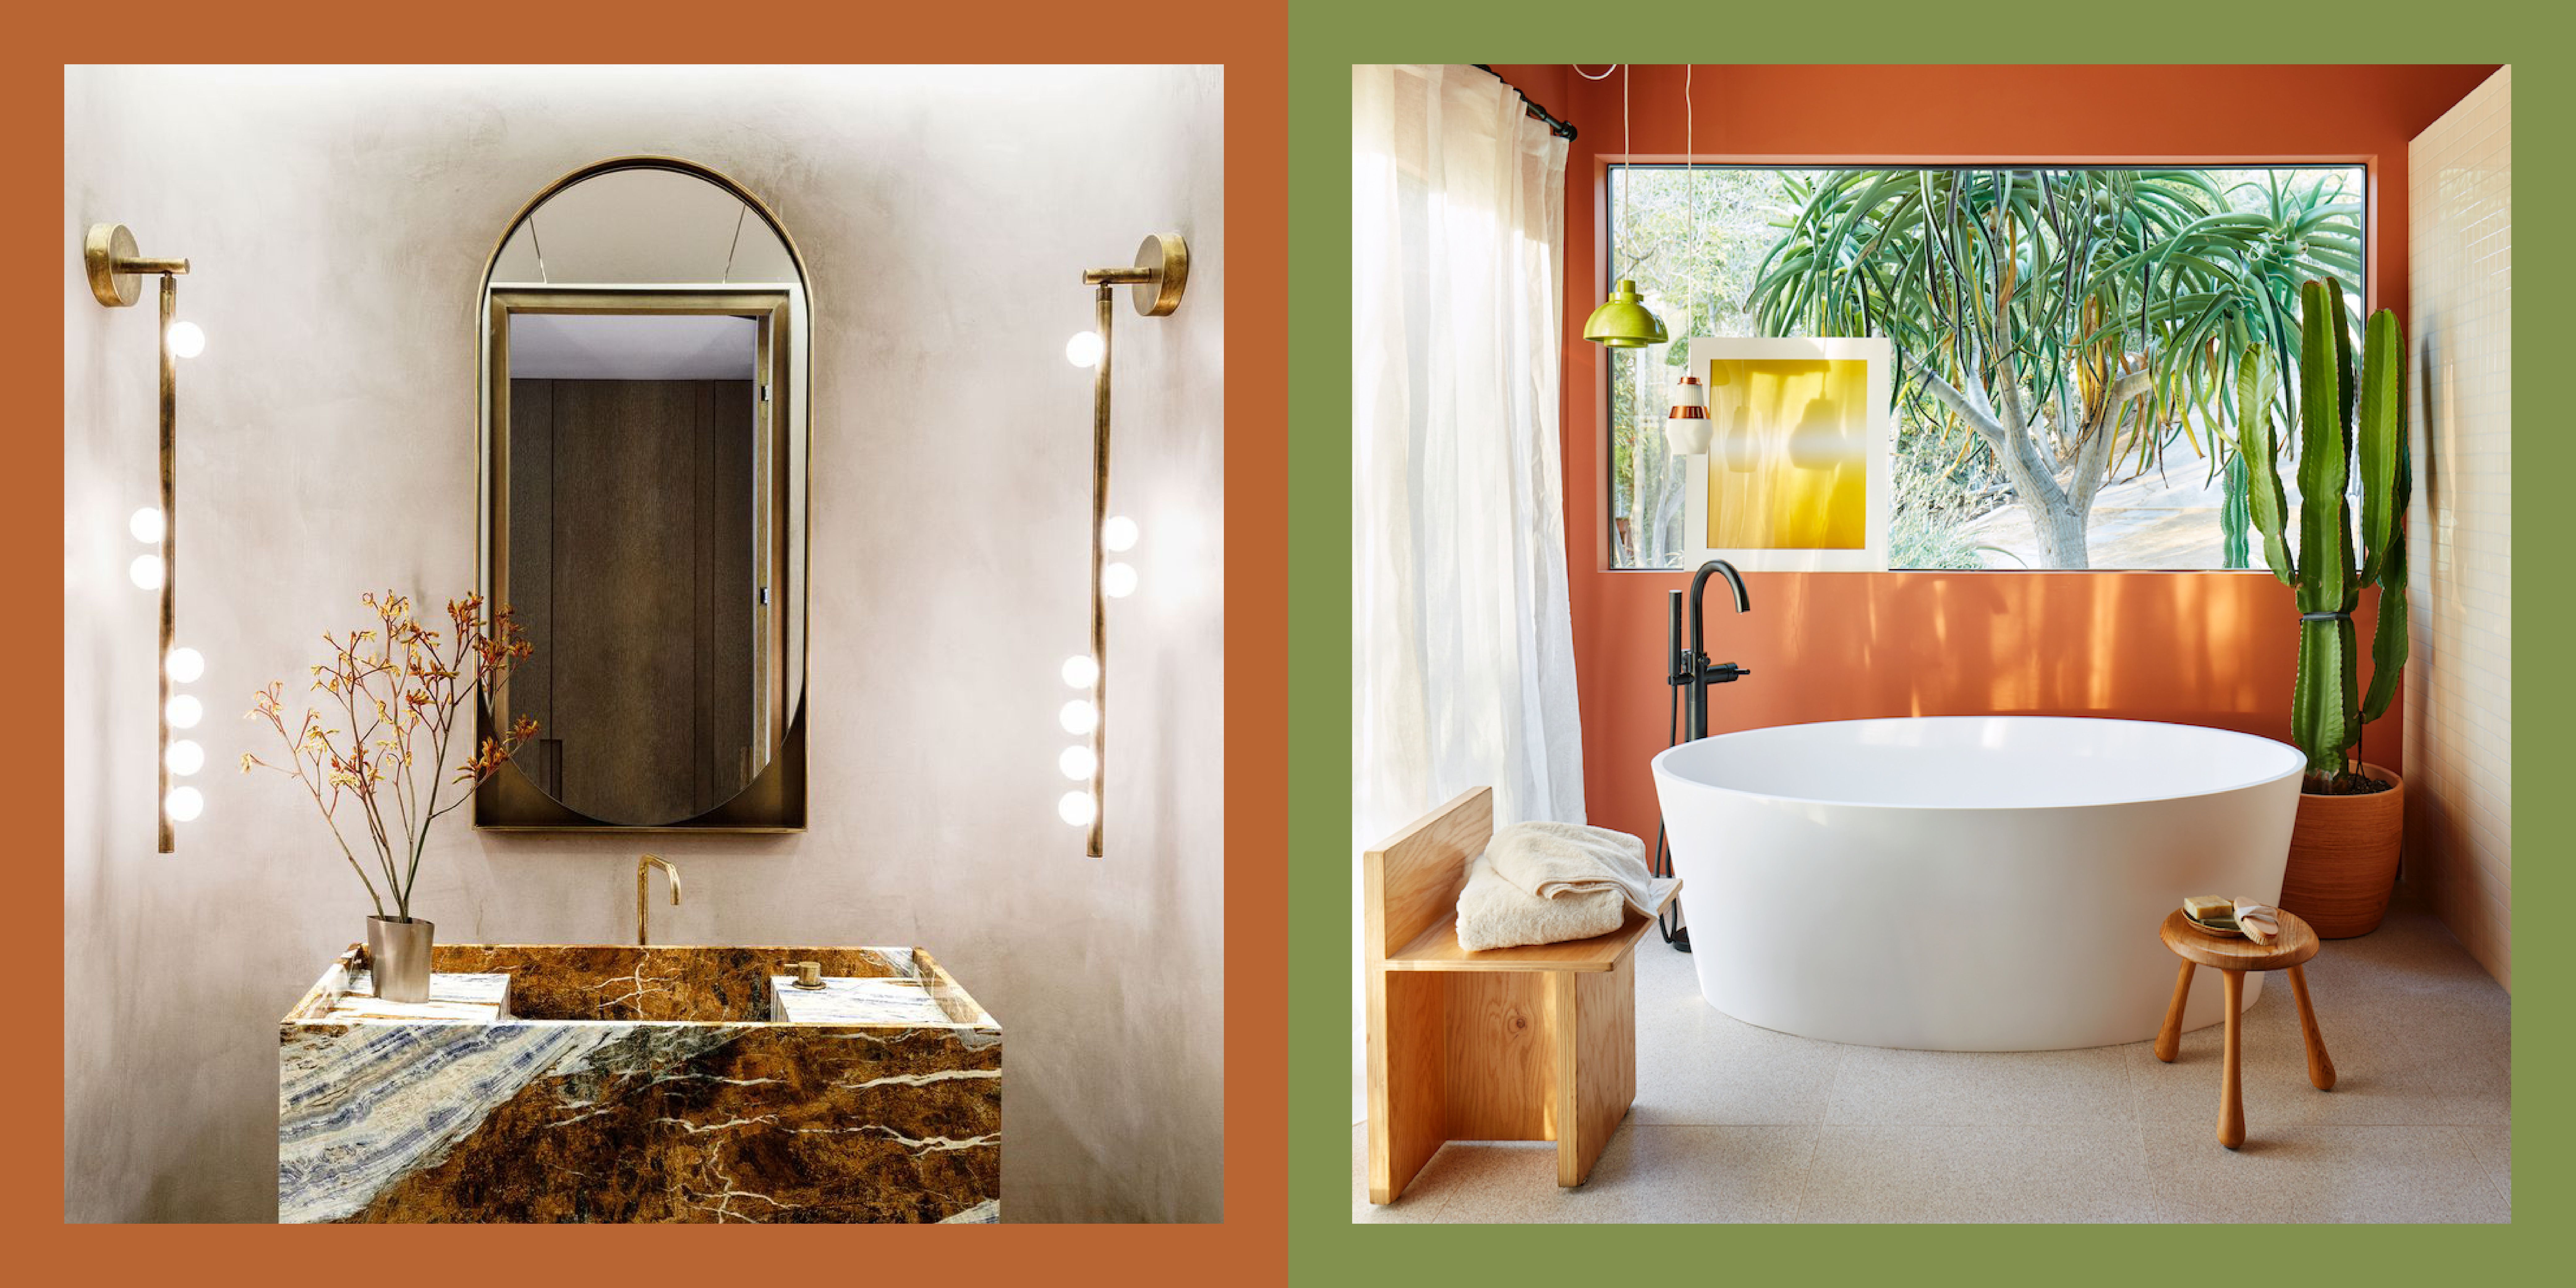 60 Beautiful Bathroom Design Ideas, Pictures For A Bathroom